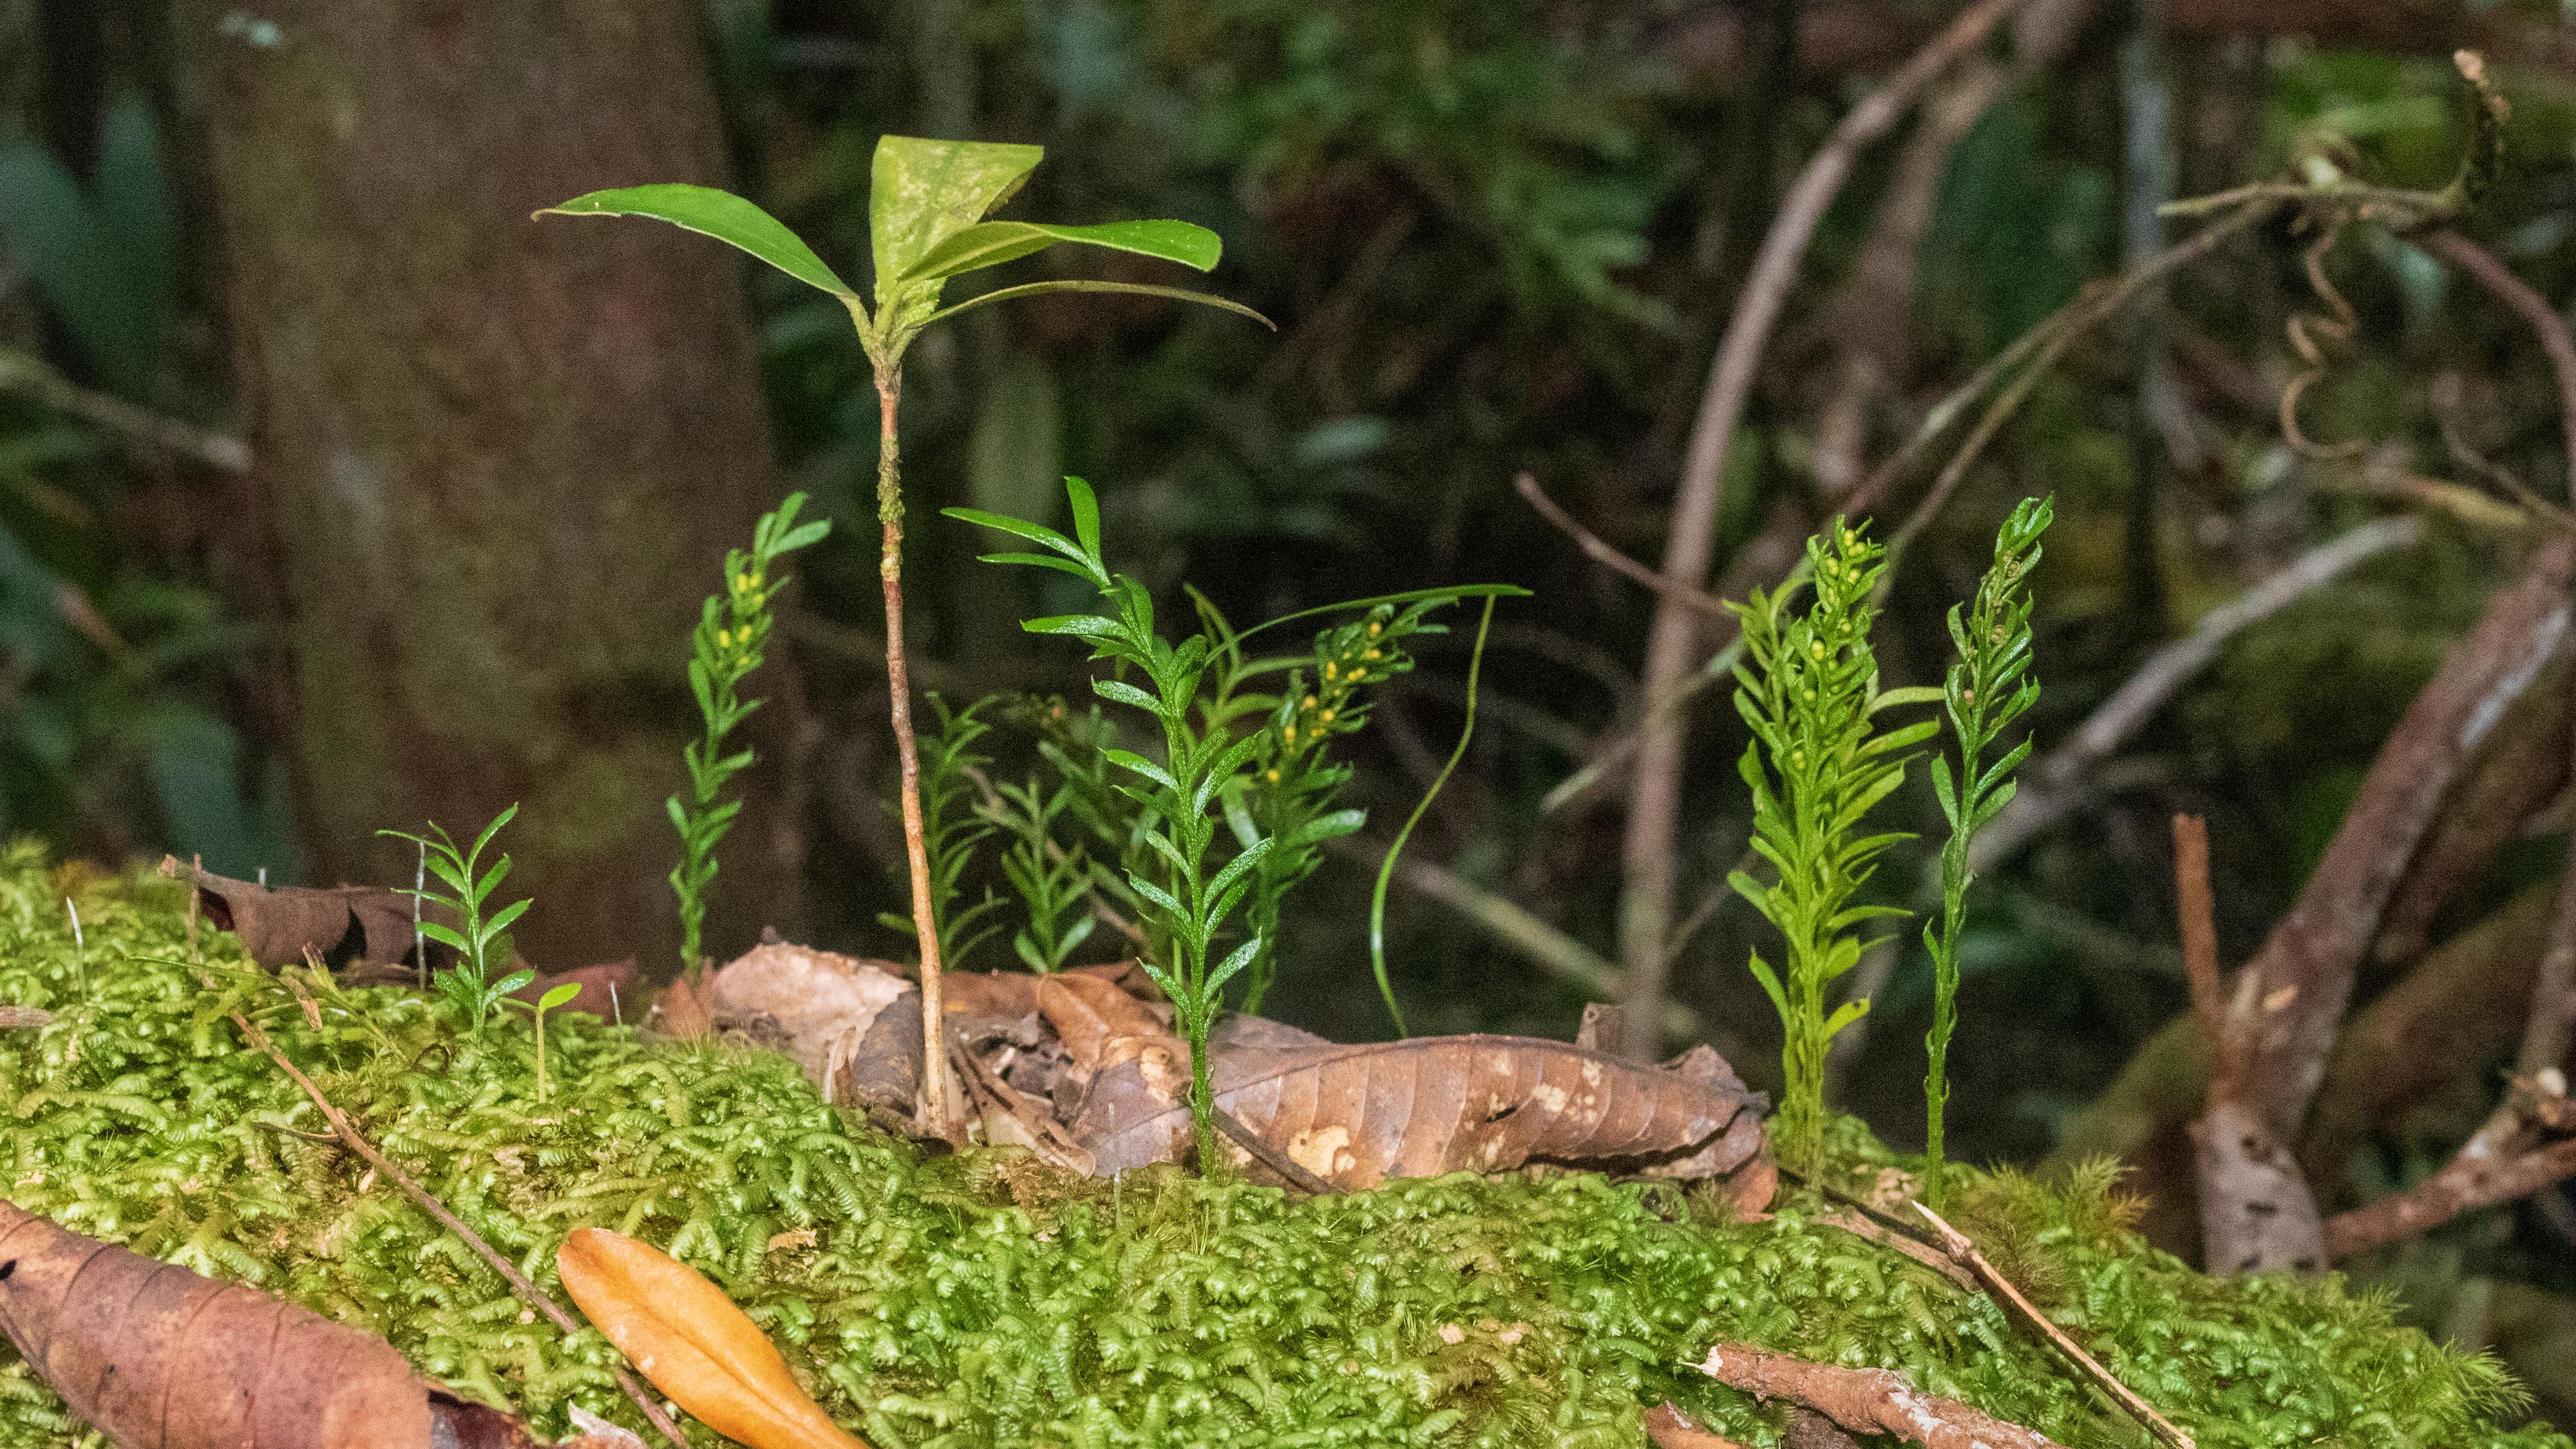 La petite fougère Tmesipteris oblanceolata possède le record du plus grand génome de tout organisme vivant sur Terre. [Kew Royal Botanic Gardens - Pol Fernandez]